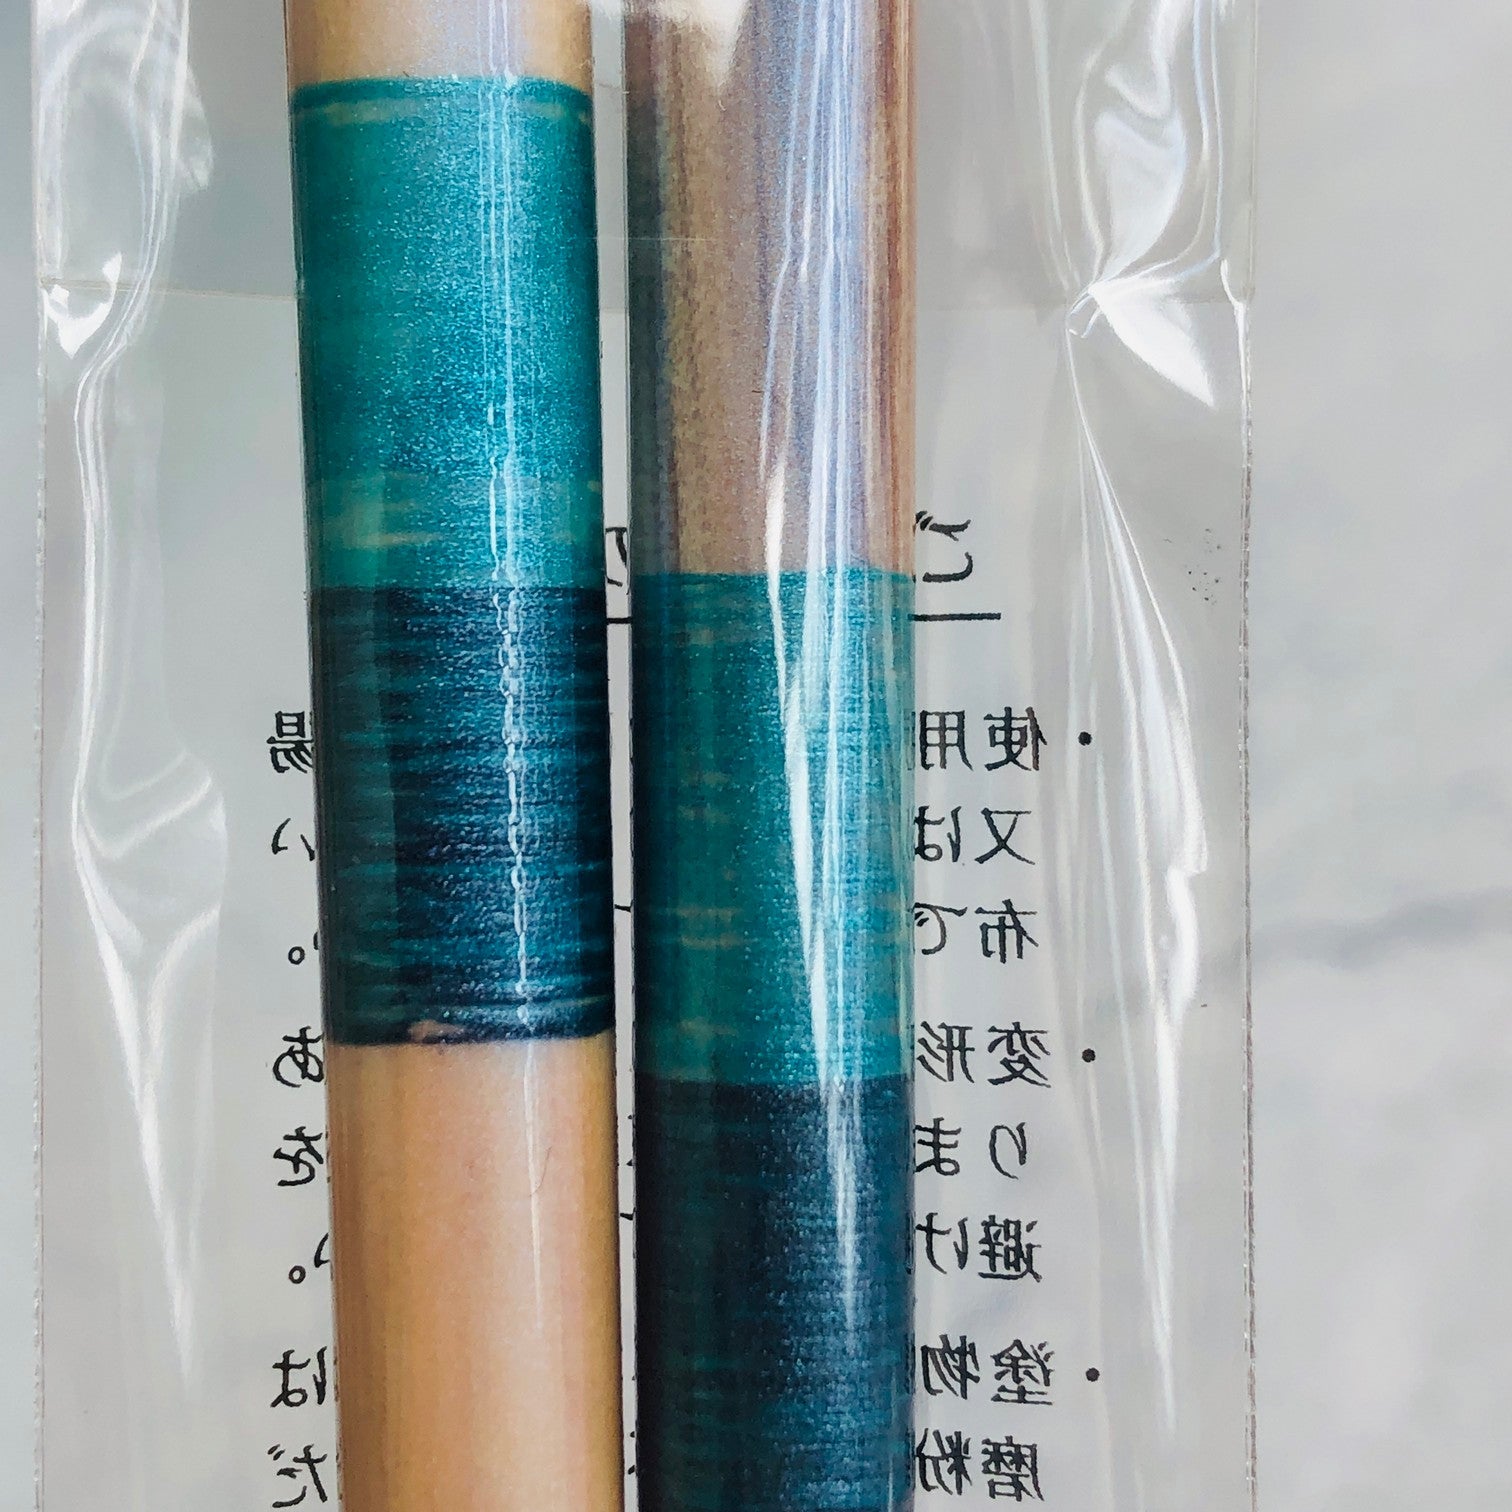 Kawai  错落格子 实木筷子23/21cm（洗碗机可用）蓝色和粉色